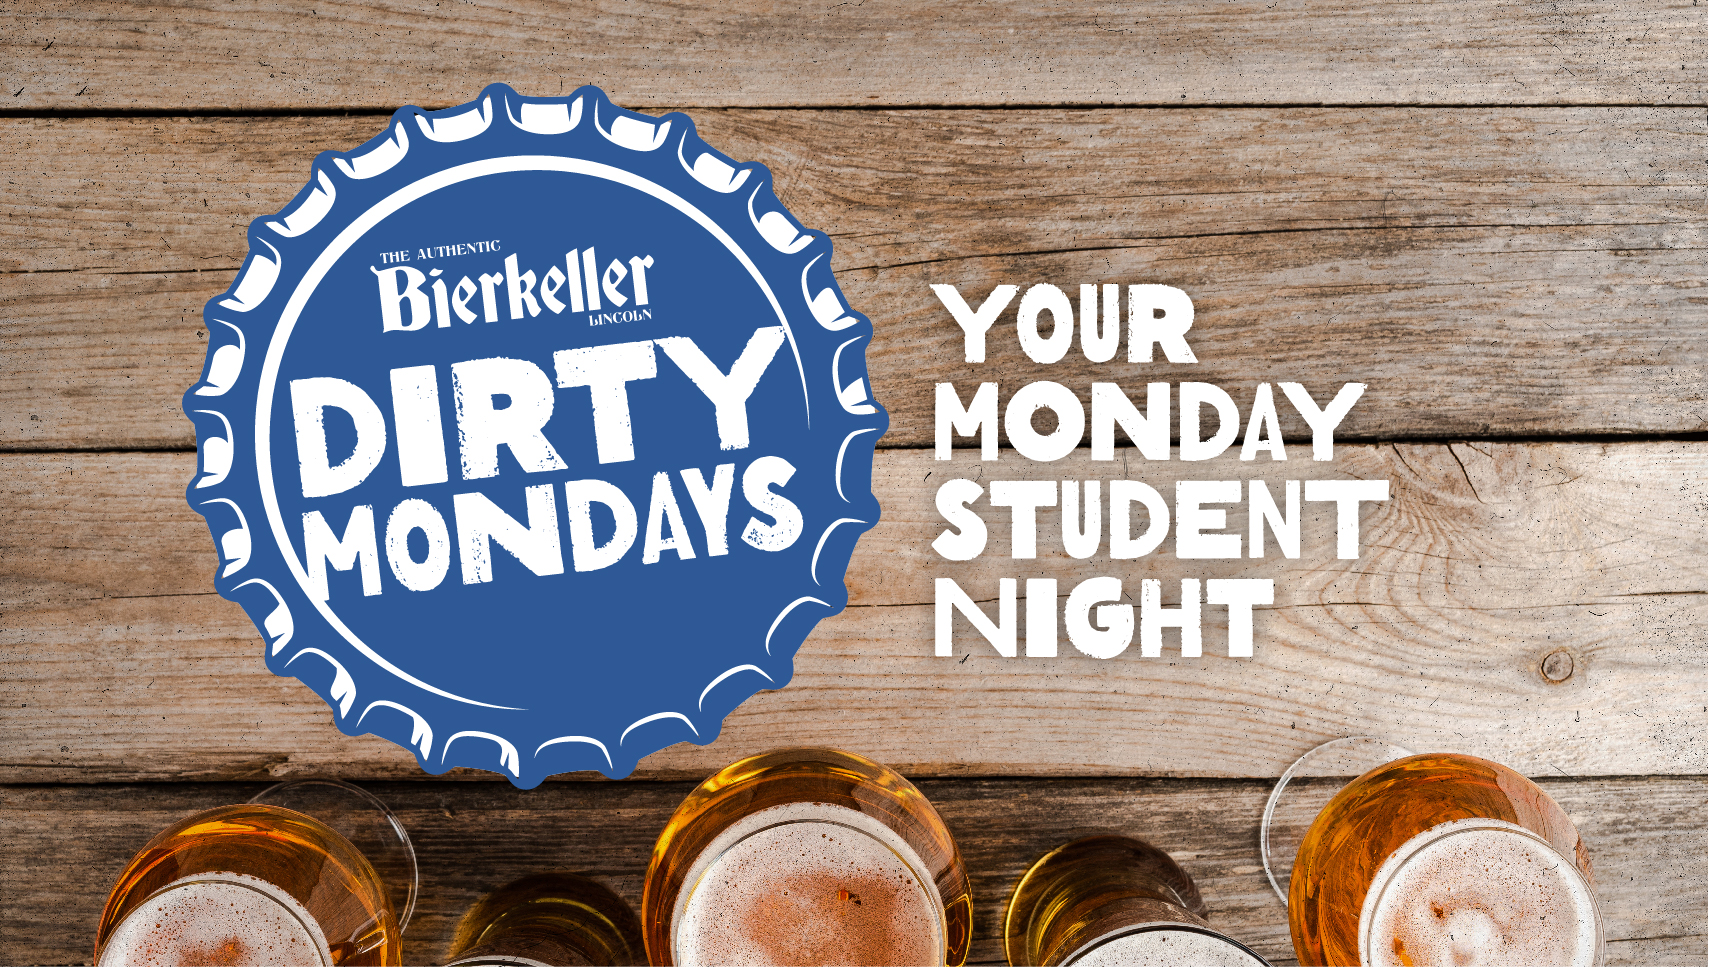 Dirty Monday’s at Bierkeller – £2 Tickets!